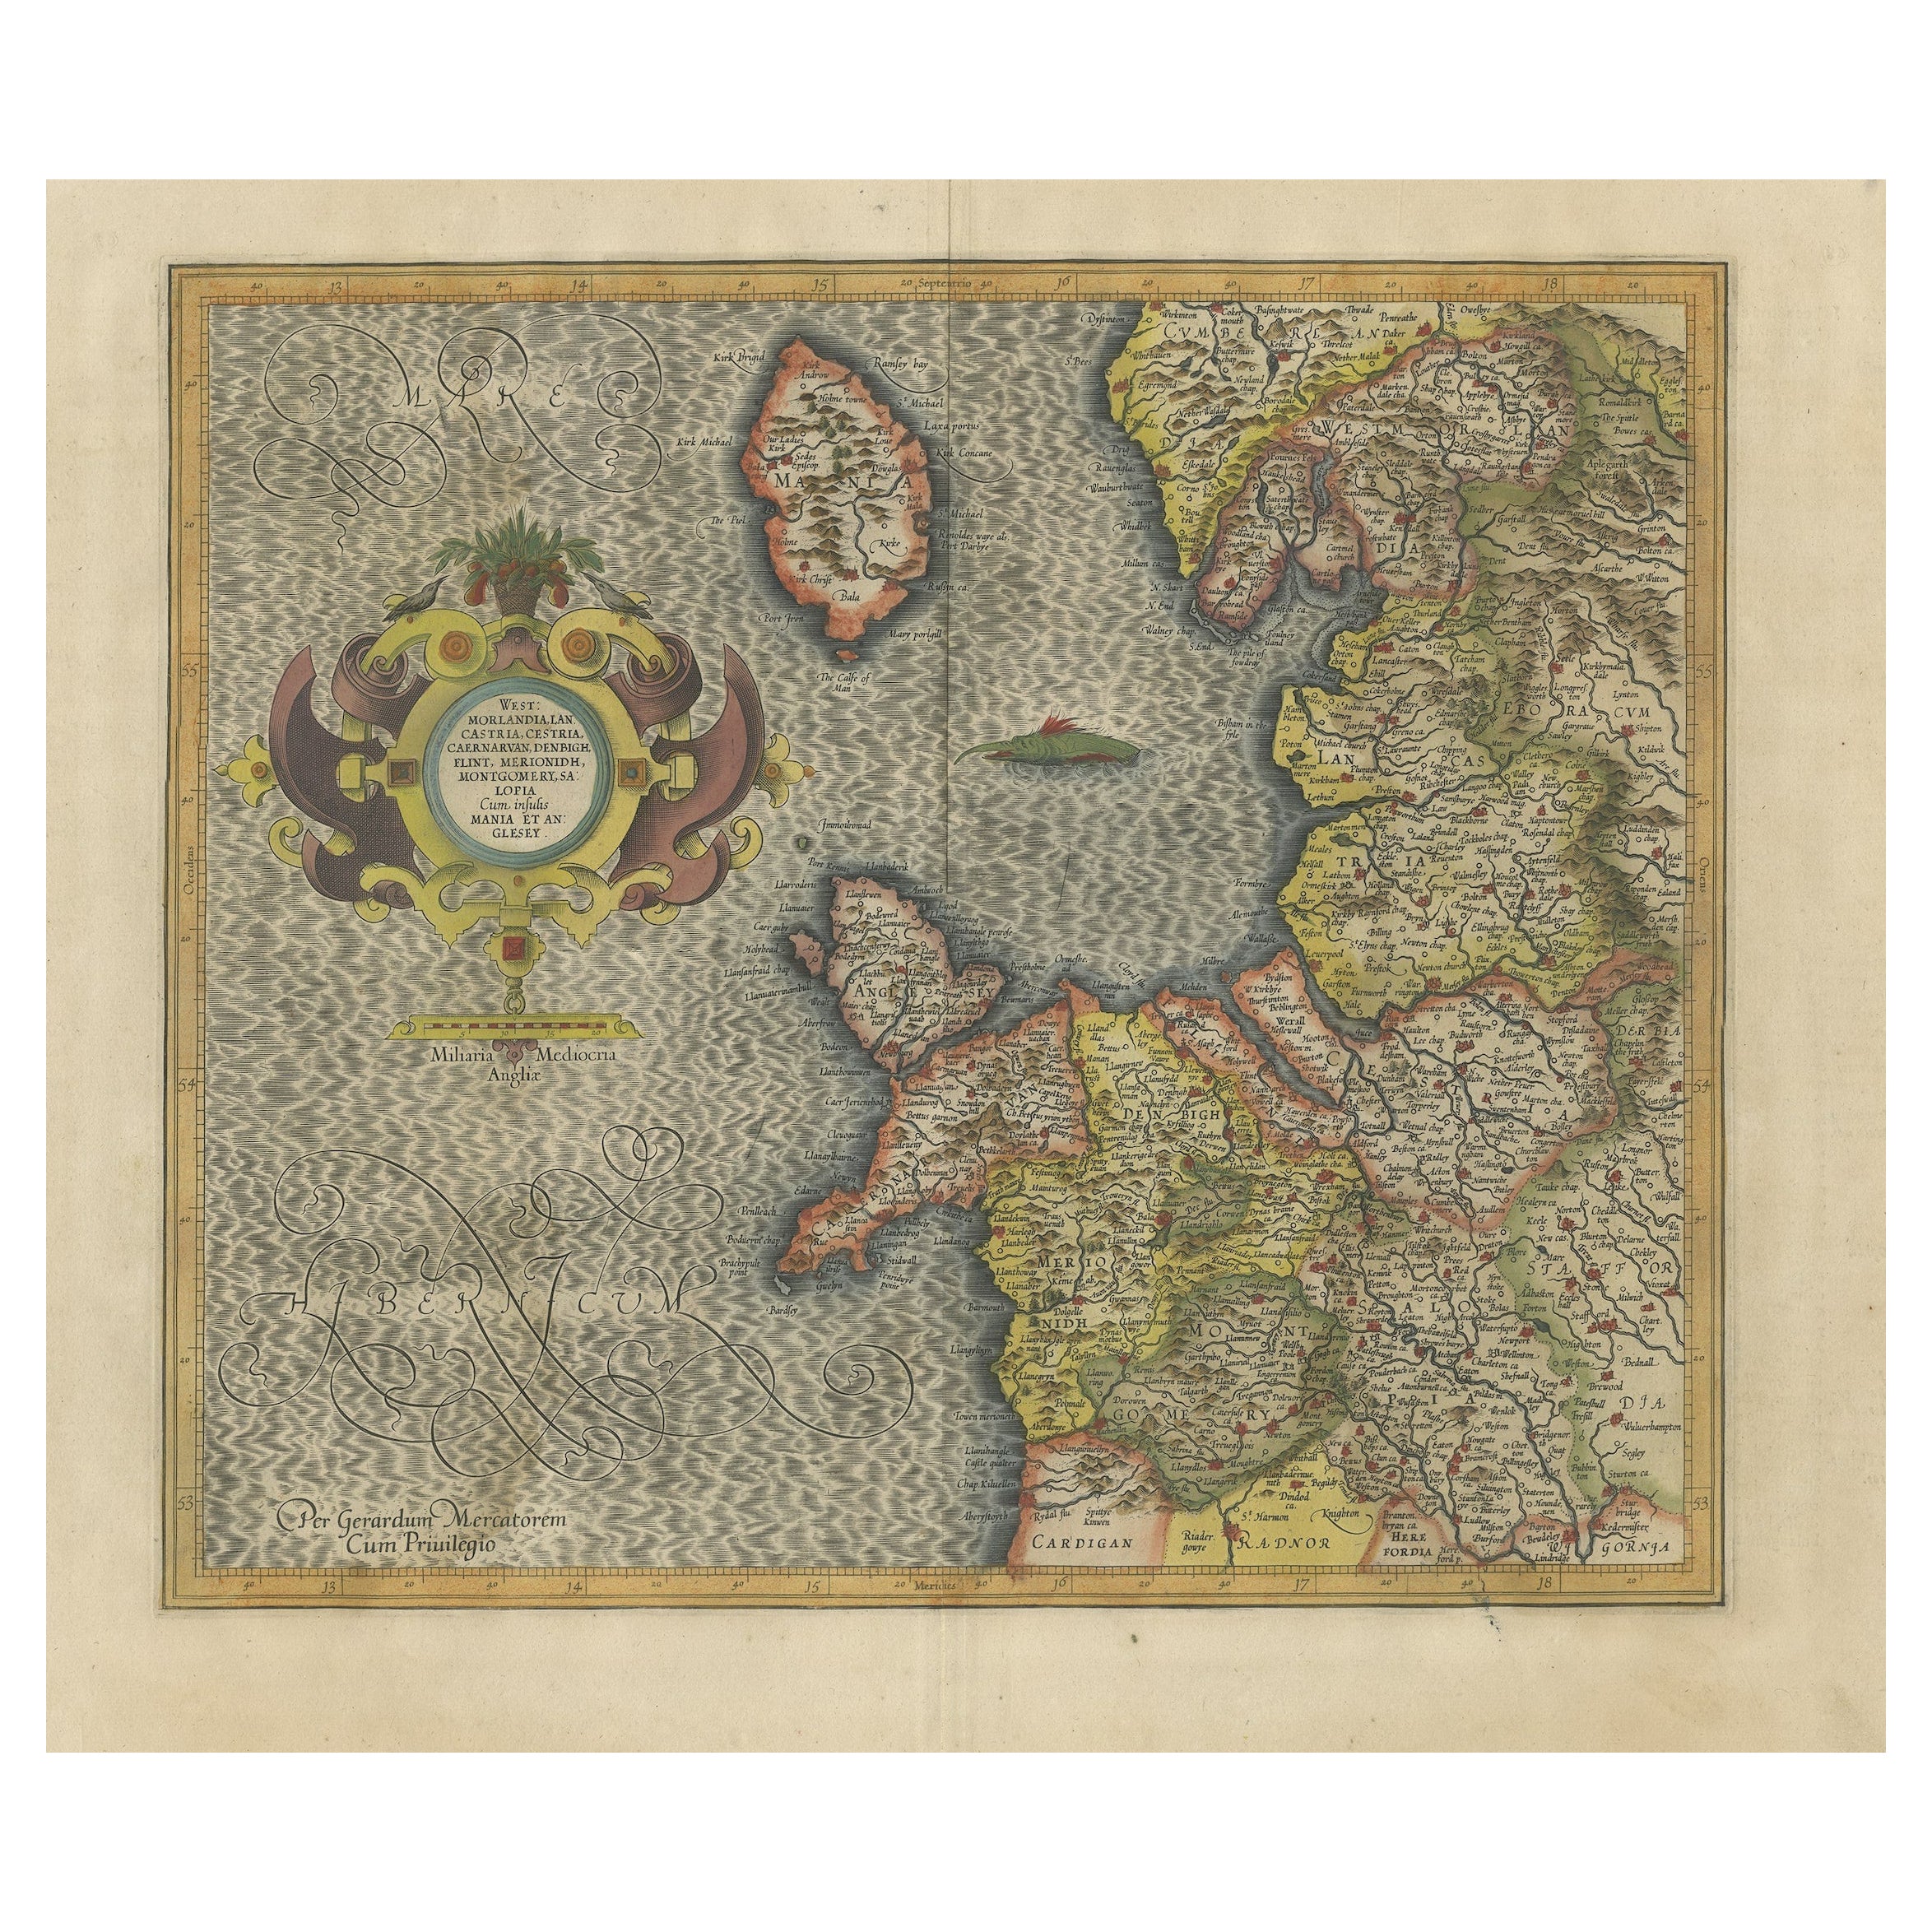 Carte ancienne d'Angleterre par Mercator/Hondius, datant d'environ 1600